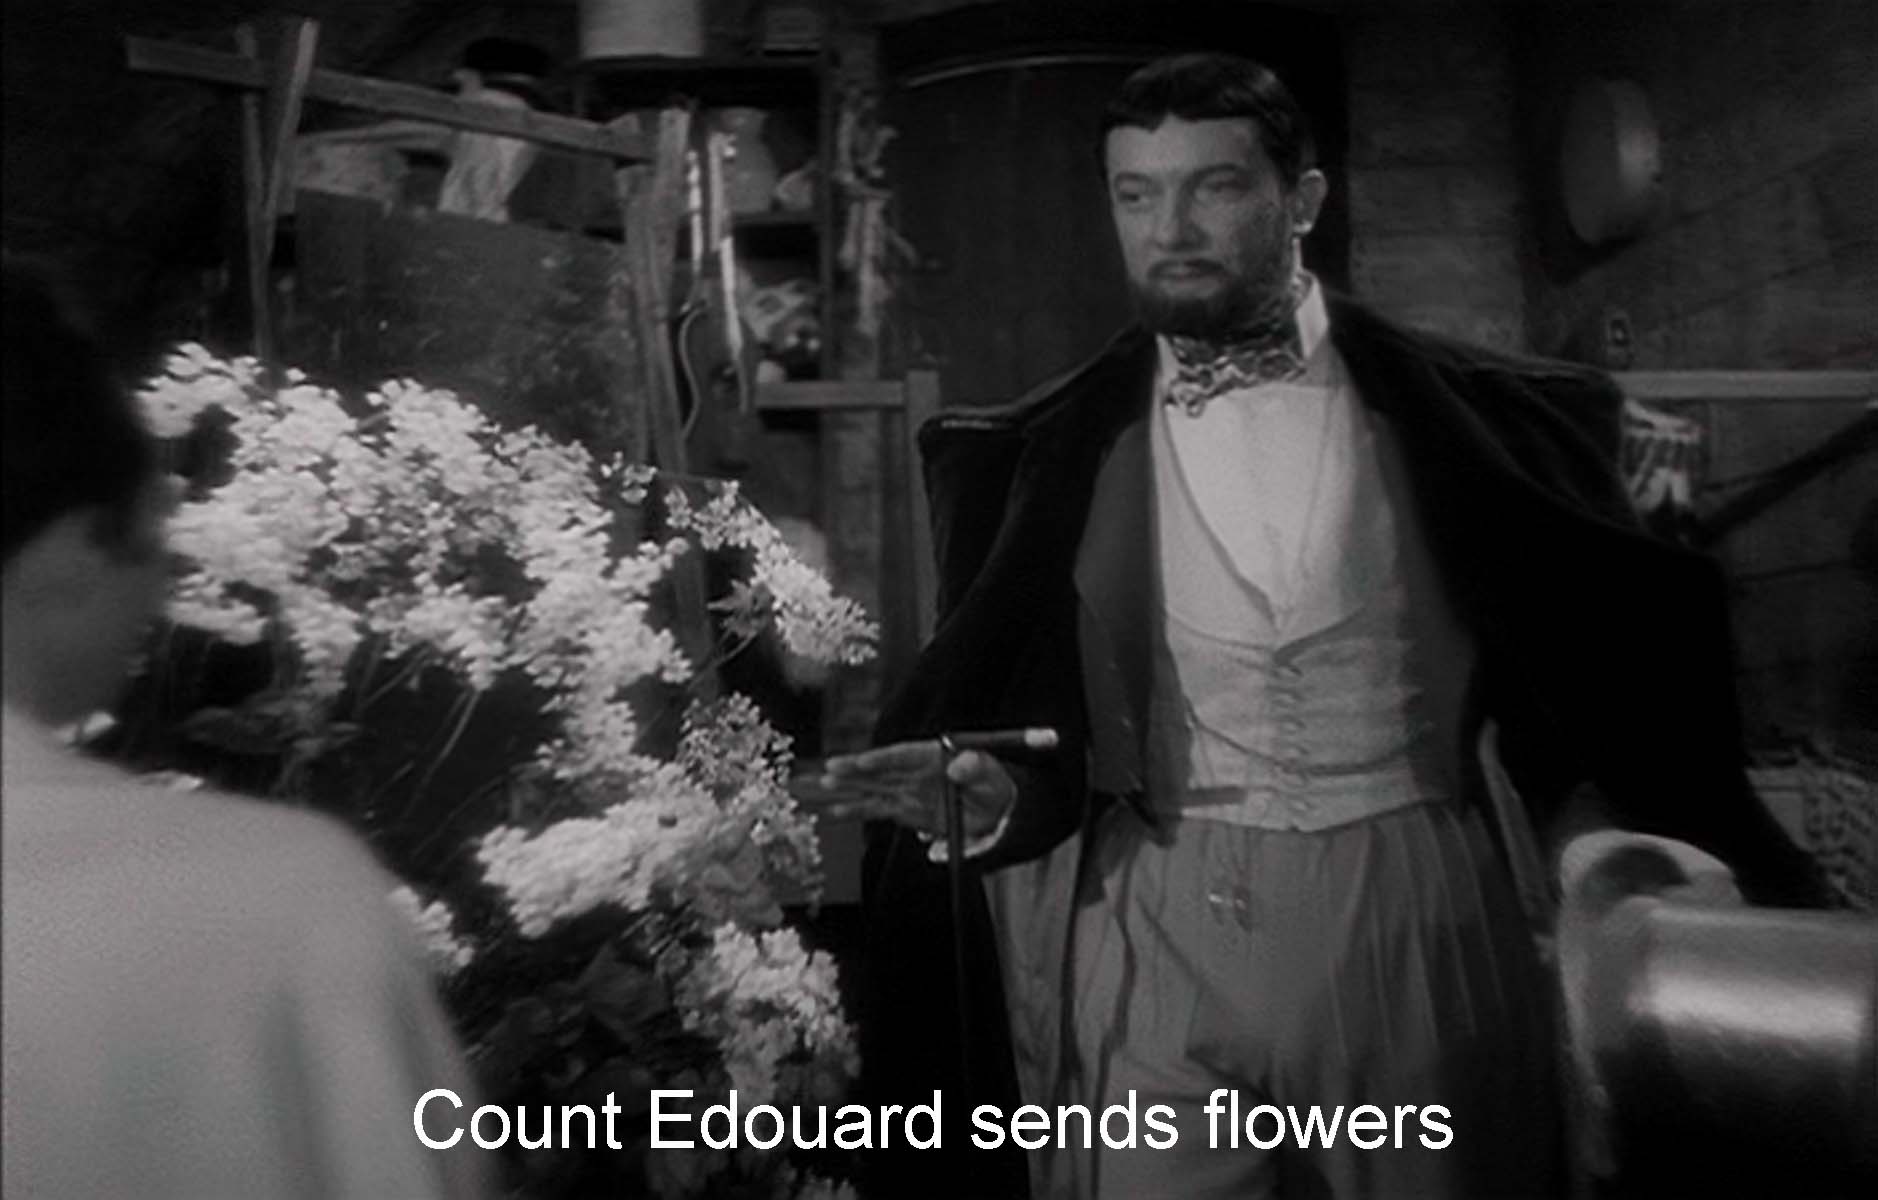 Count Edouard sends flowers